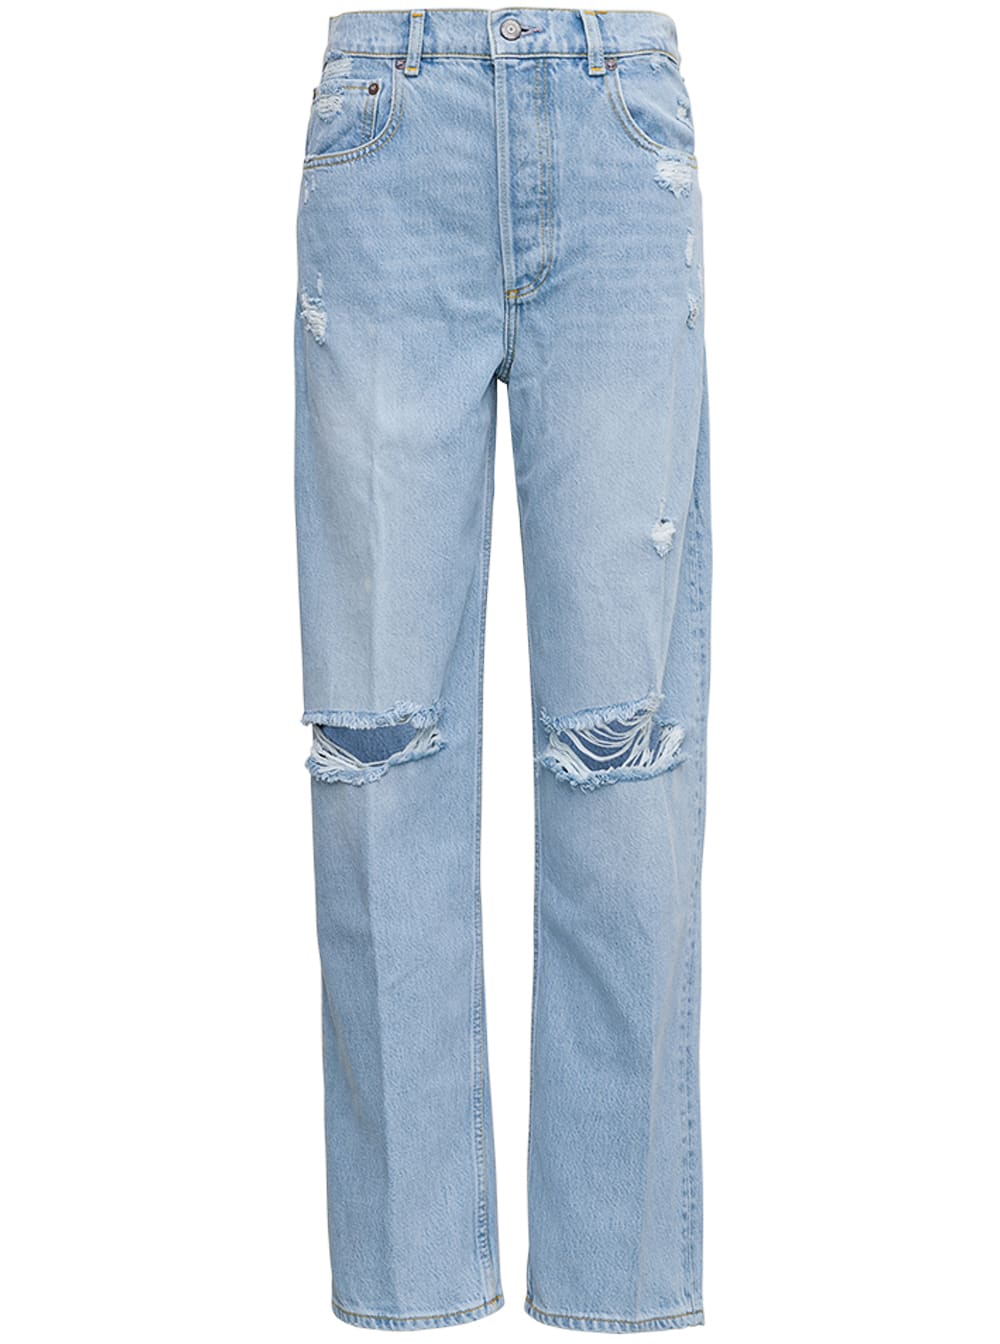 Boyish Blue Denim Jeans With Tears Details